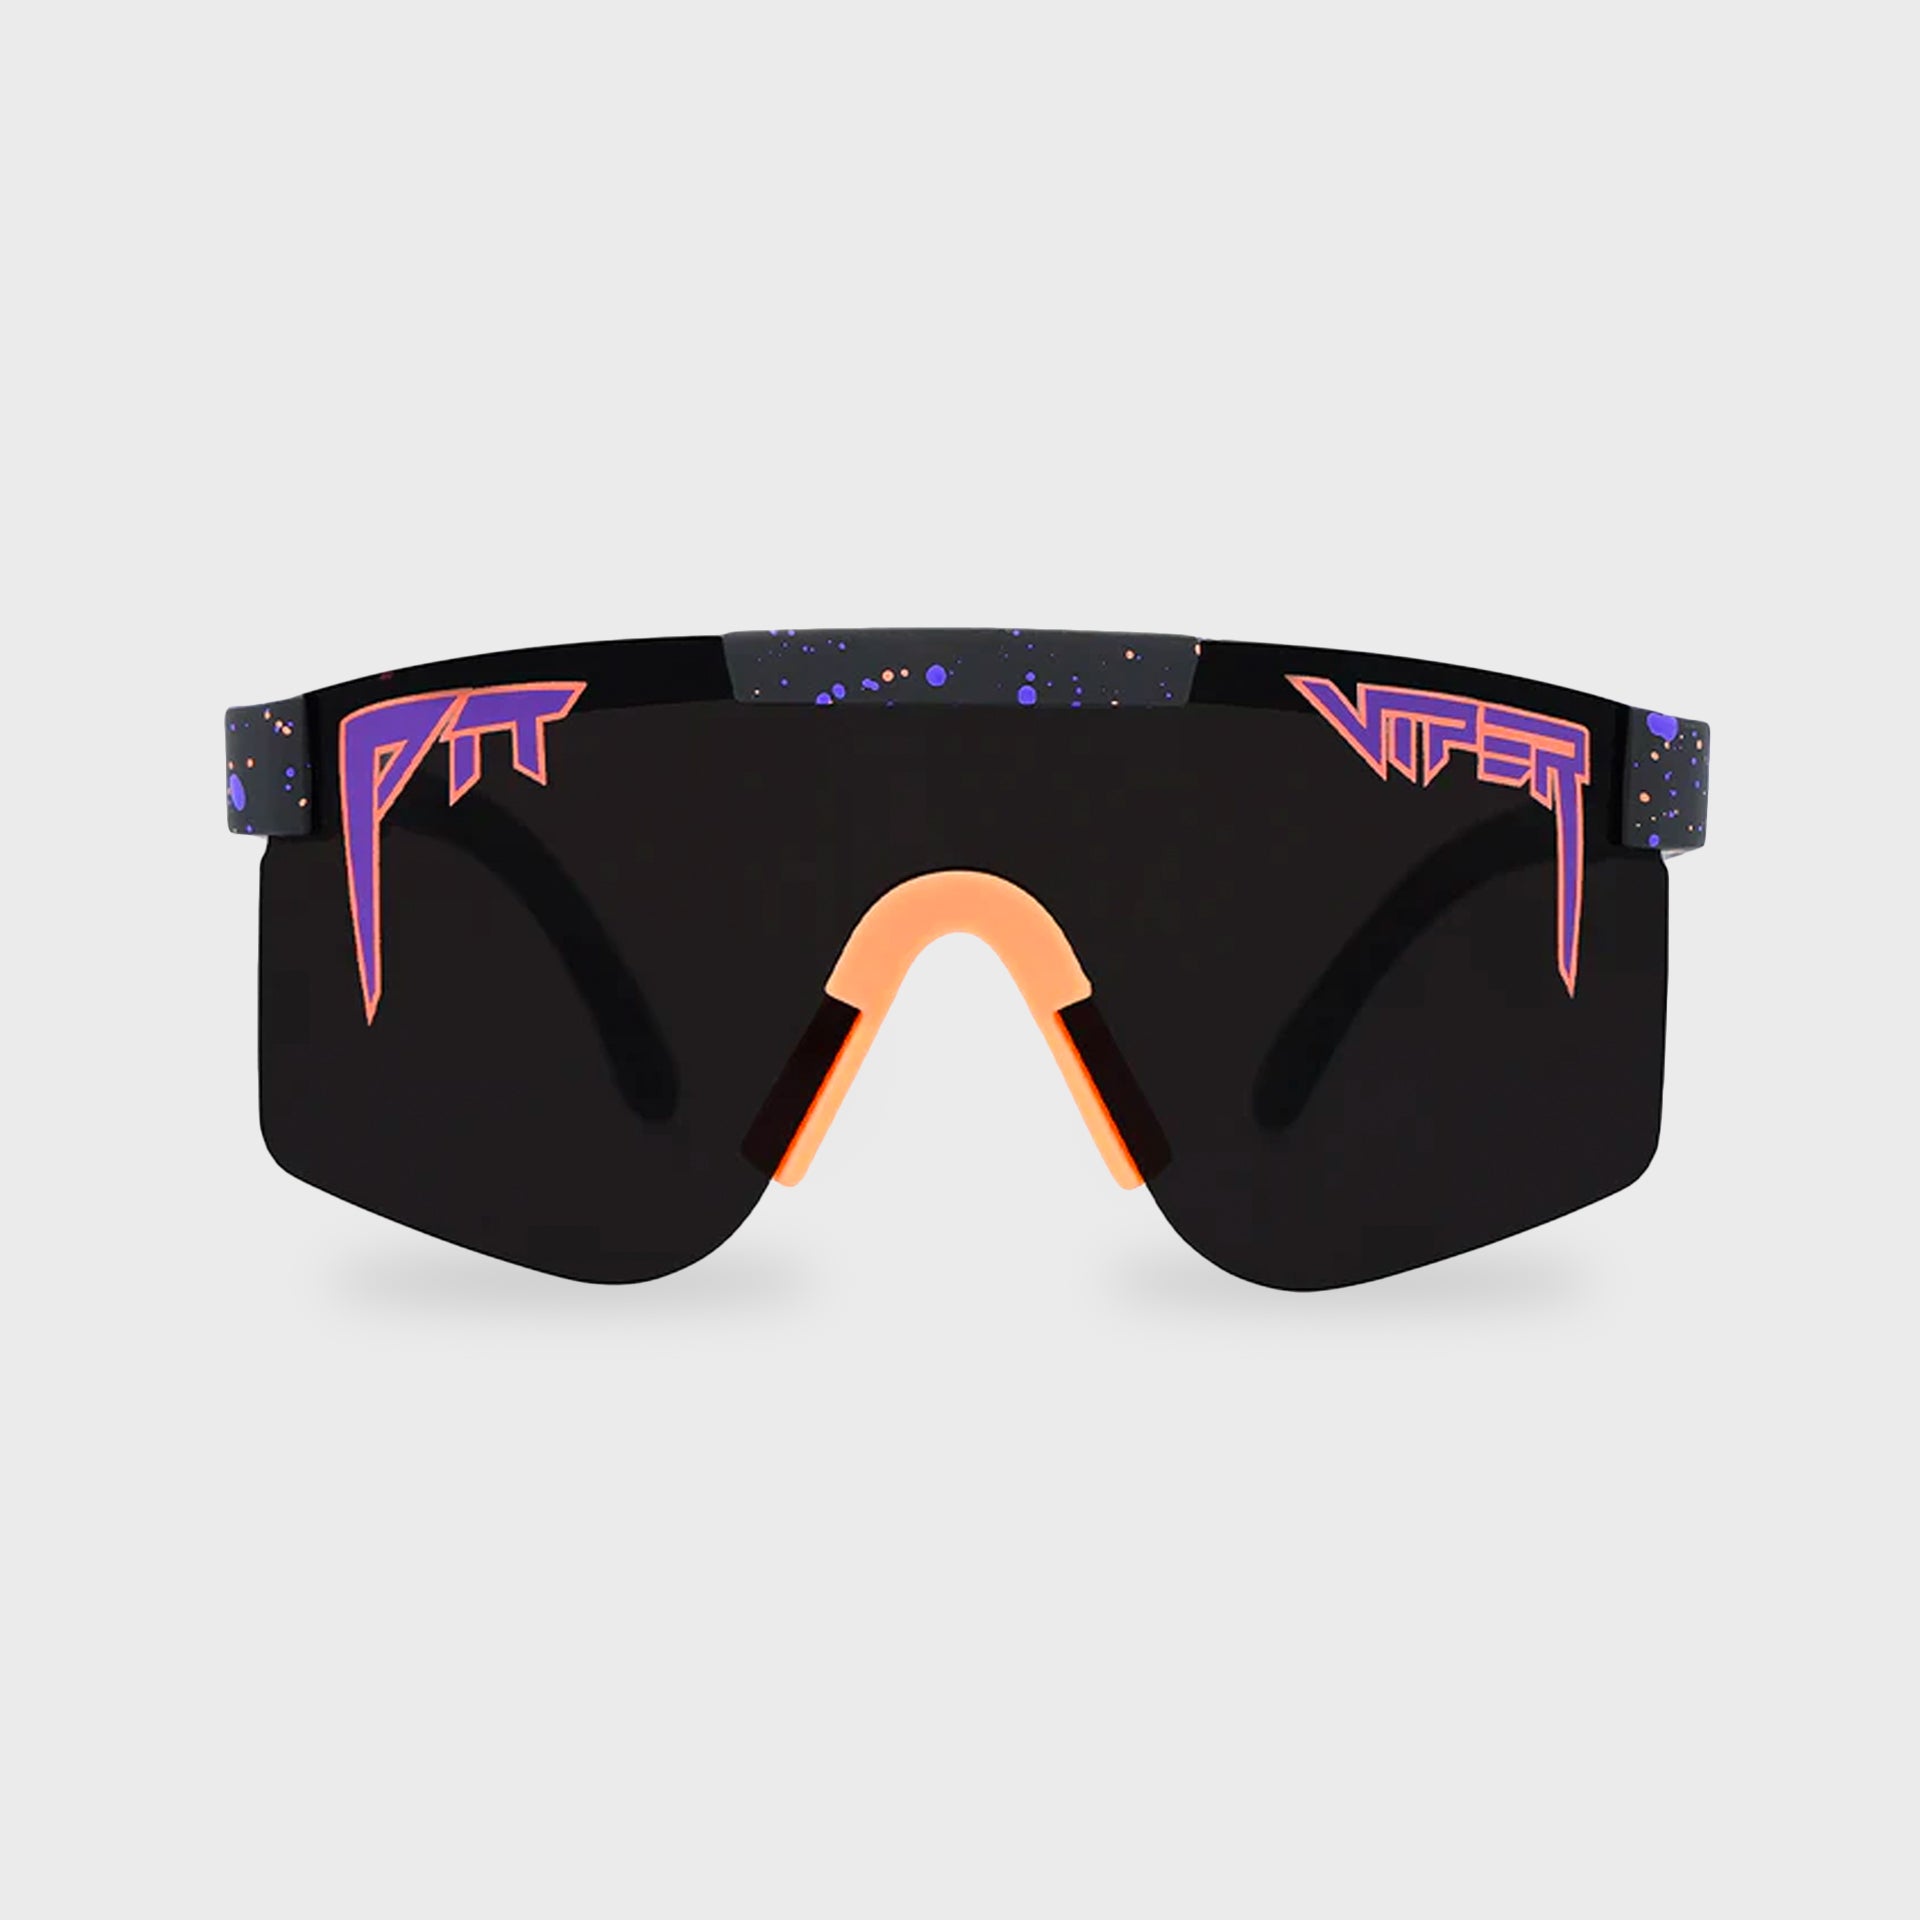 Pit Viper The Naples Polarized Single Wide Sunglasses - ManGo Surfing